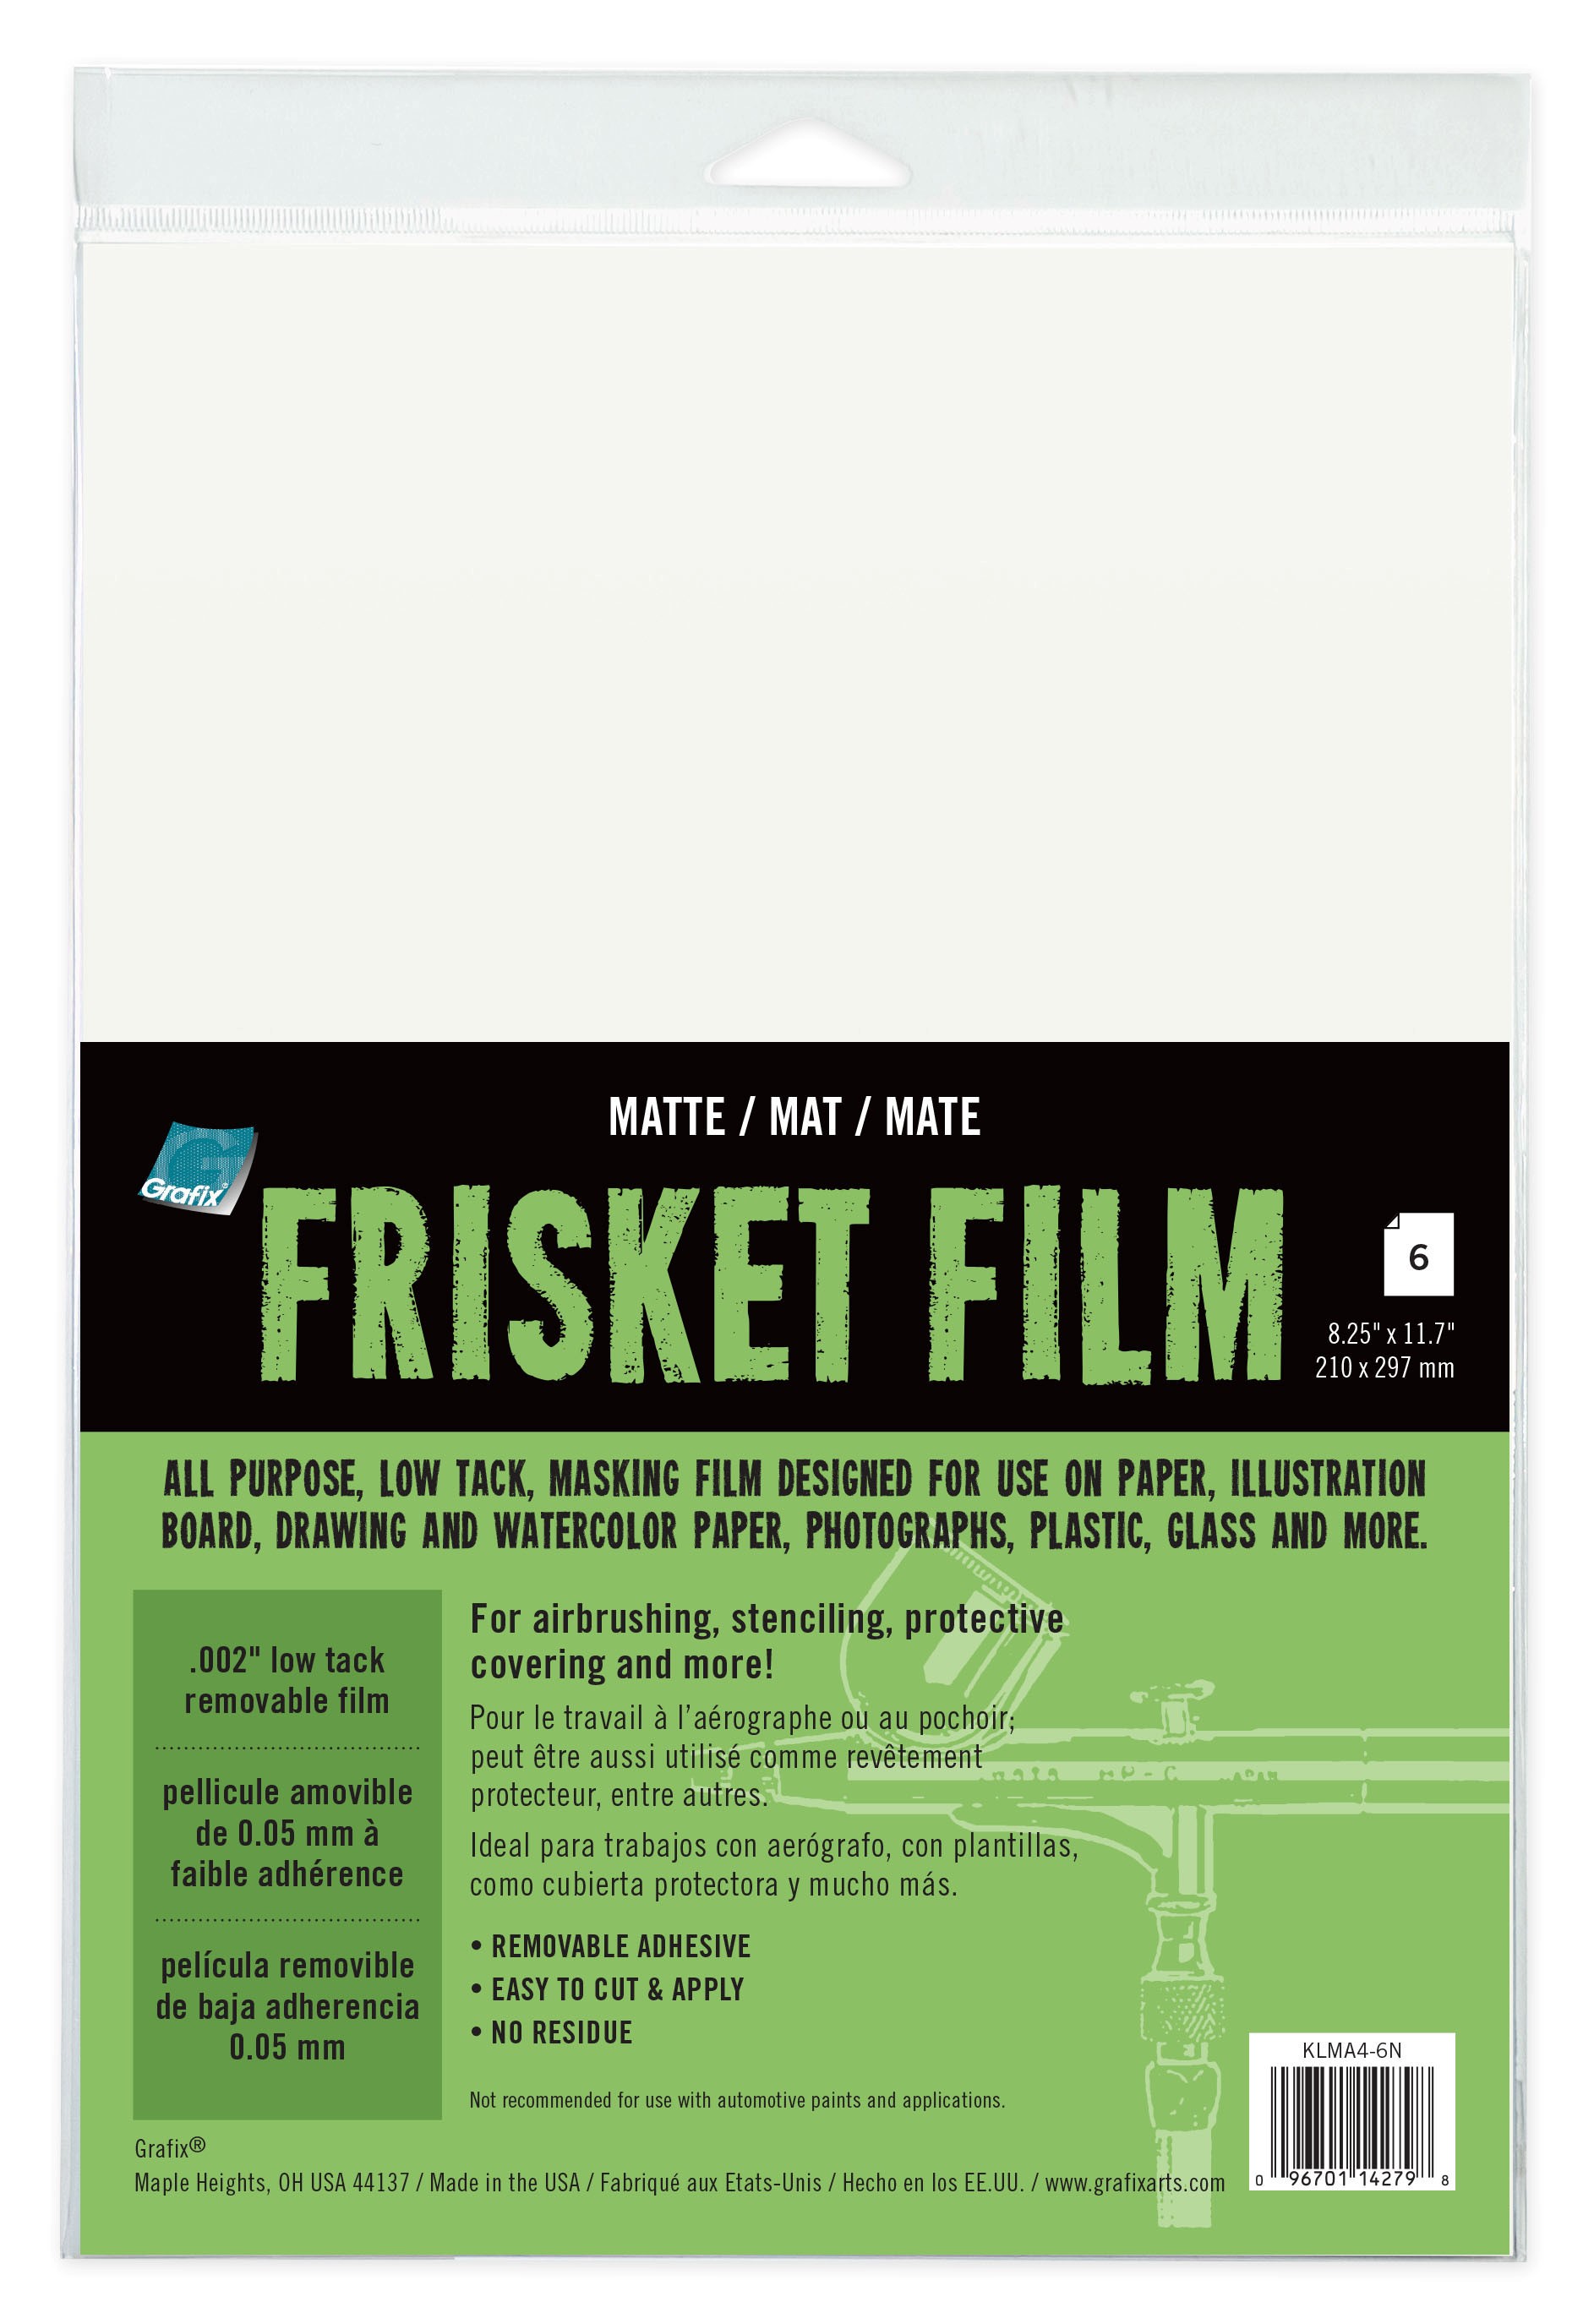 Explore the Best Frisketfilm Art